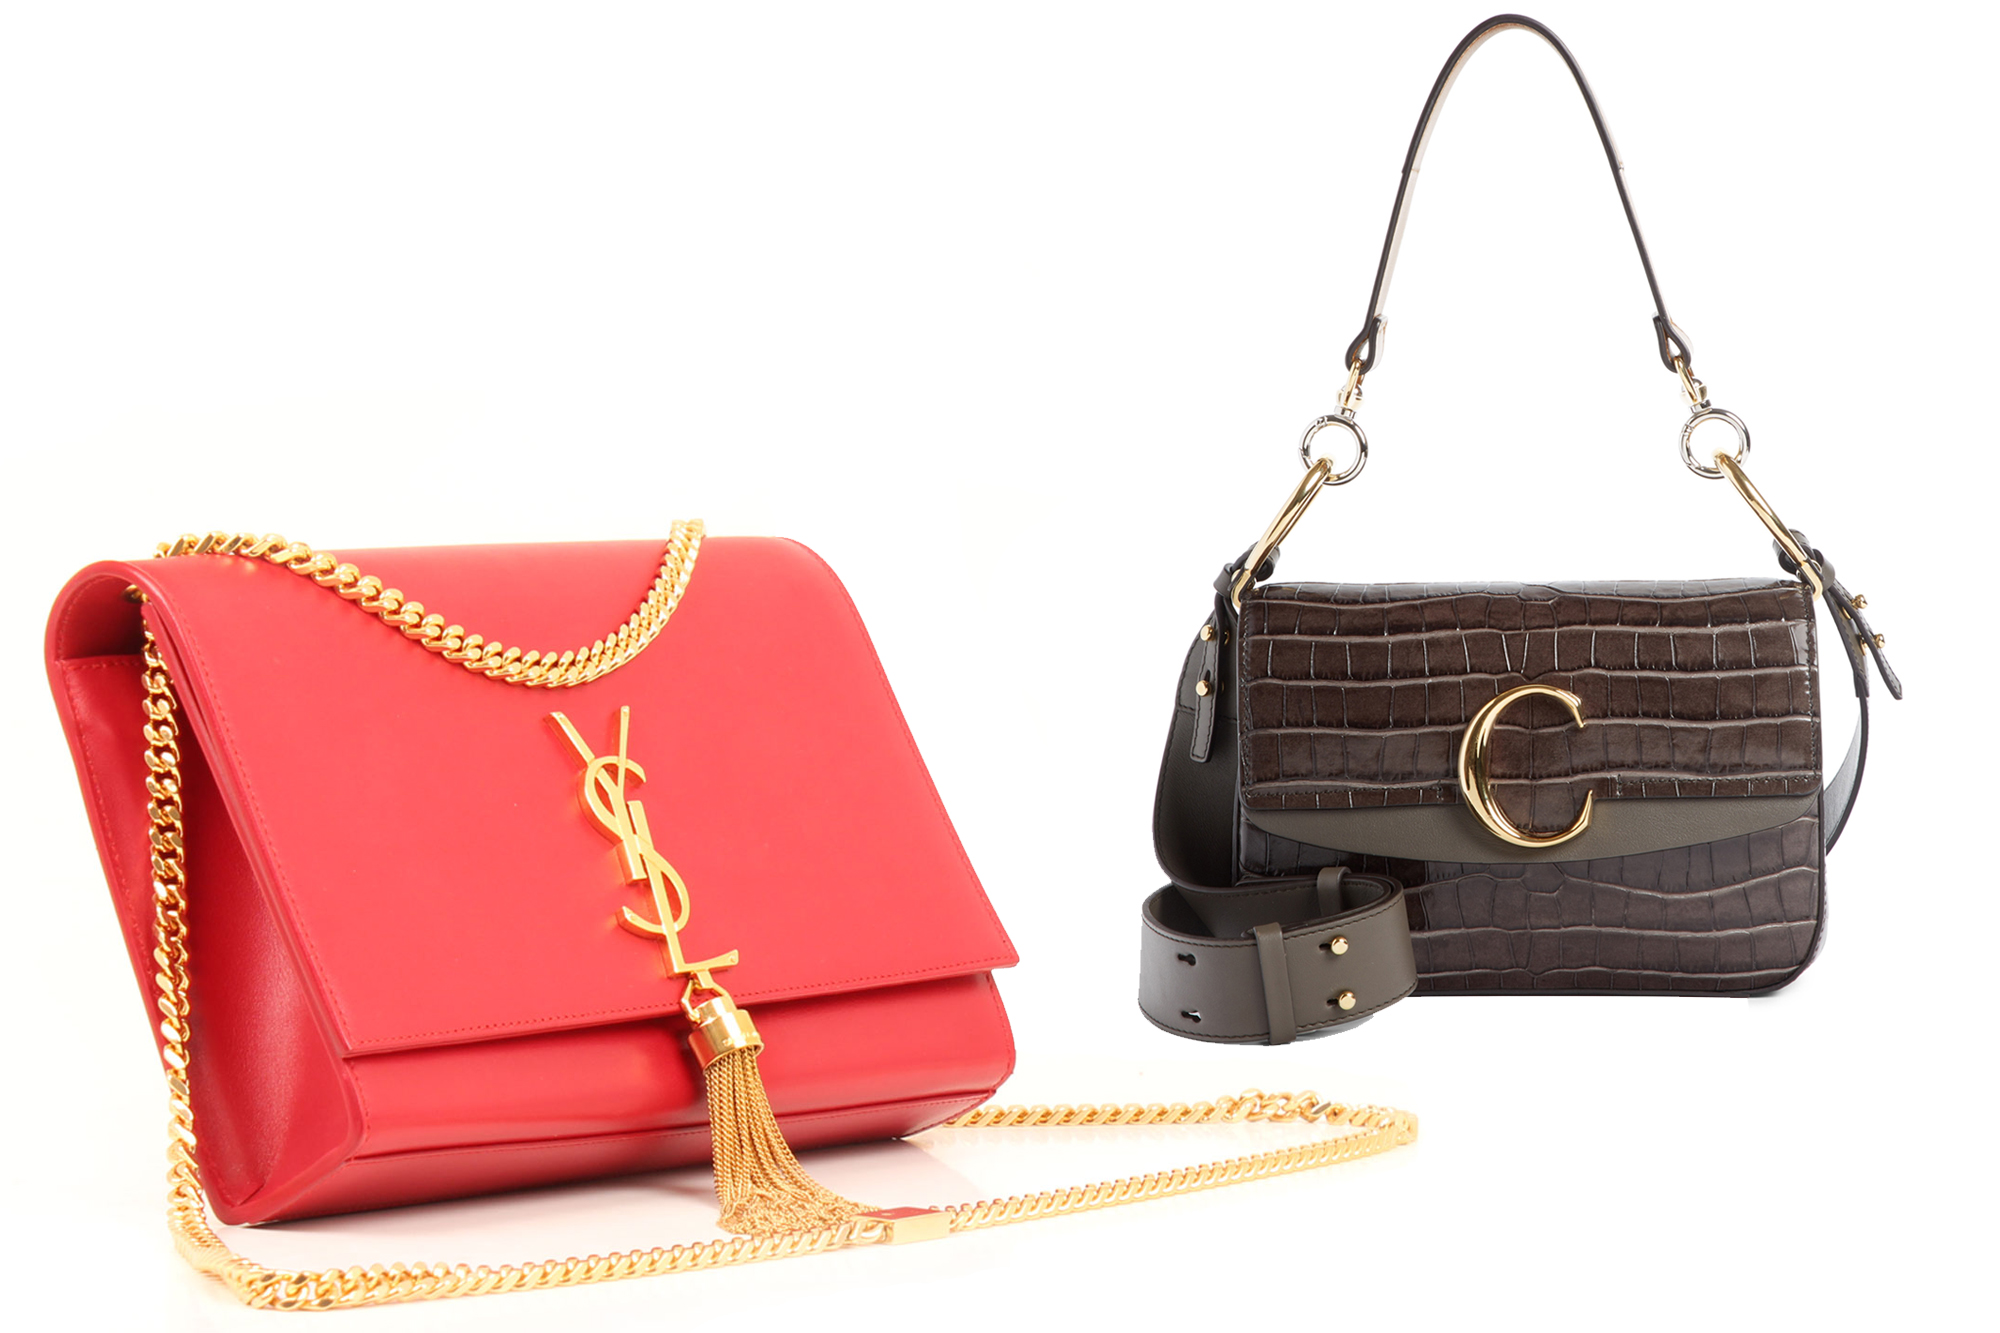 Designer Handbags - Buy, Sell and Loan | Goodfellas Pawn Shop